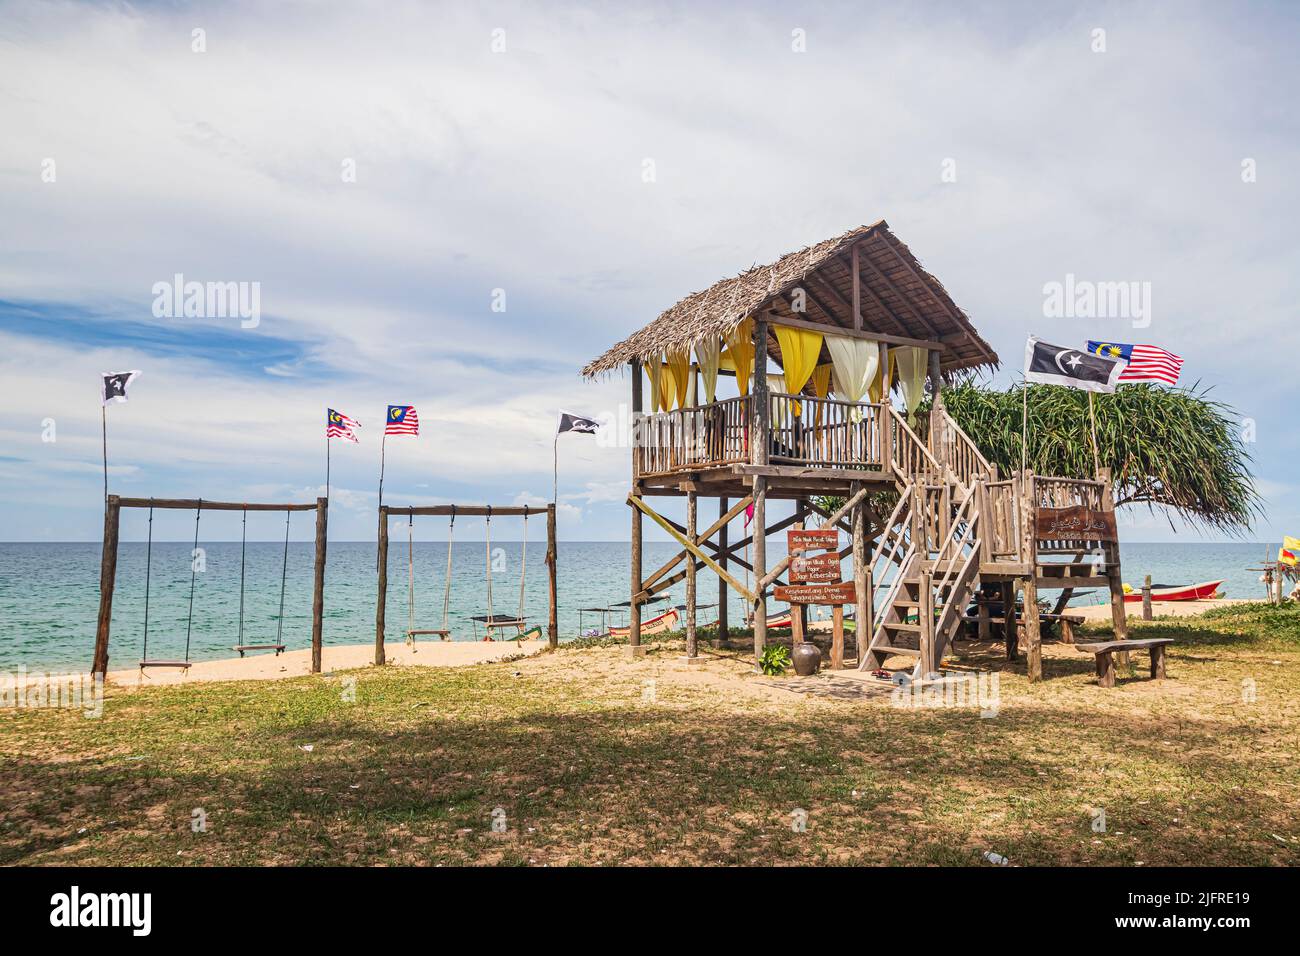 Strandhütte auf Stelzen, Schaukeln und Fahnen am Strand von Pantai Jambu Bongkok Beach in Terengganu, Malaysia. Stockfoto